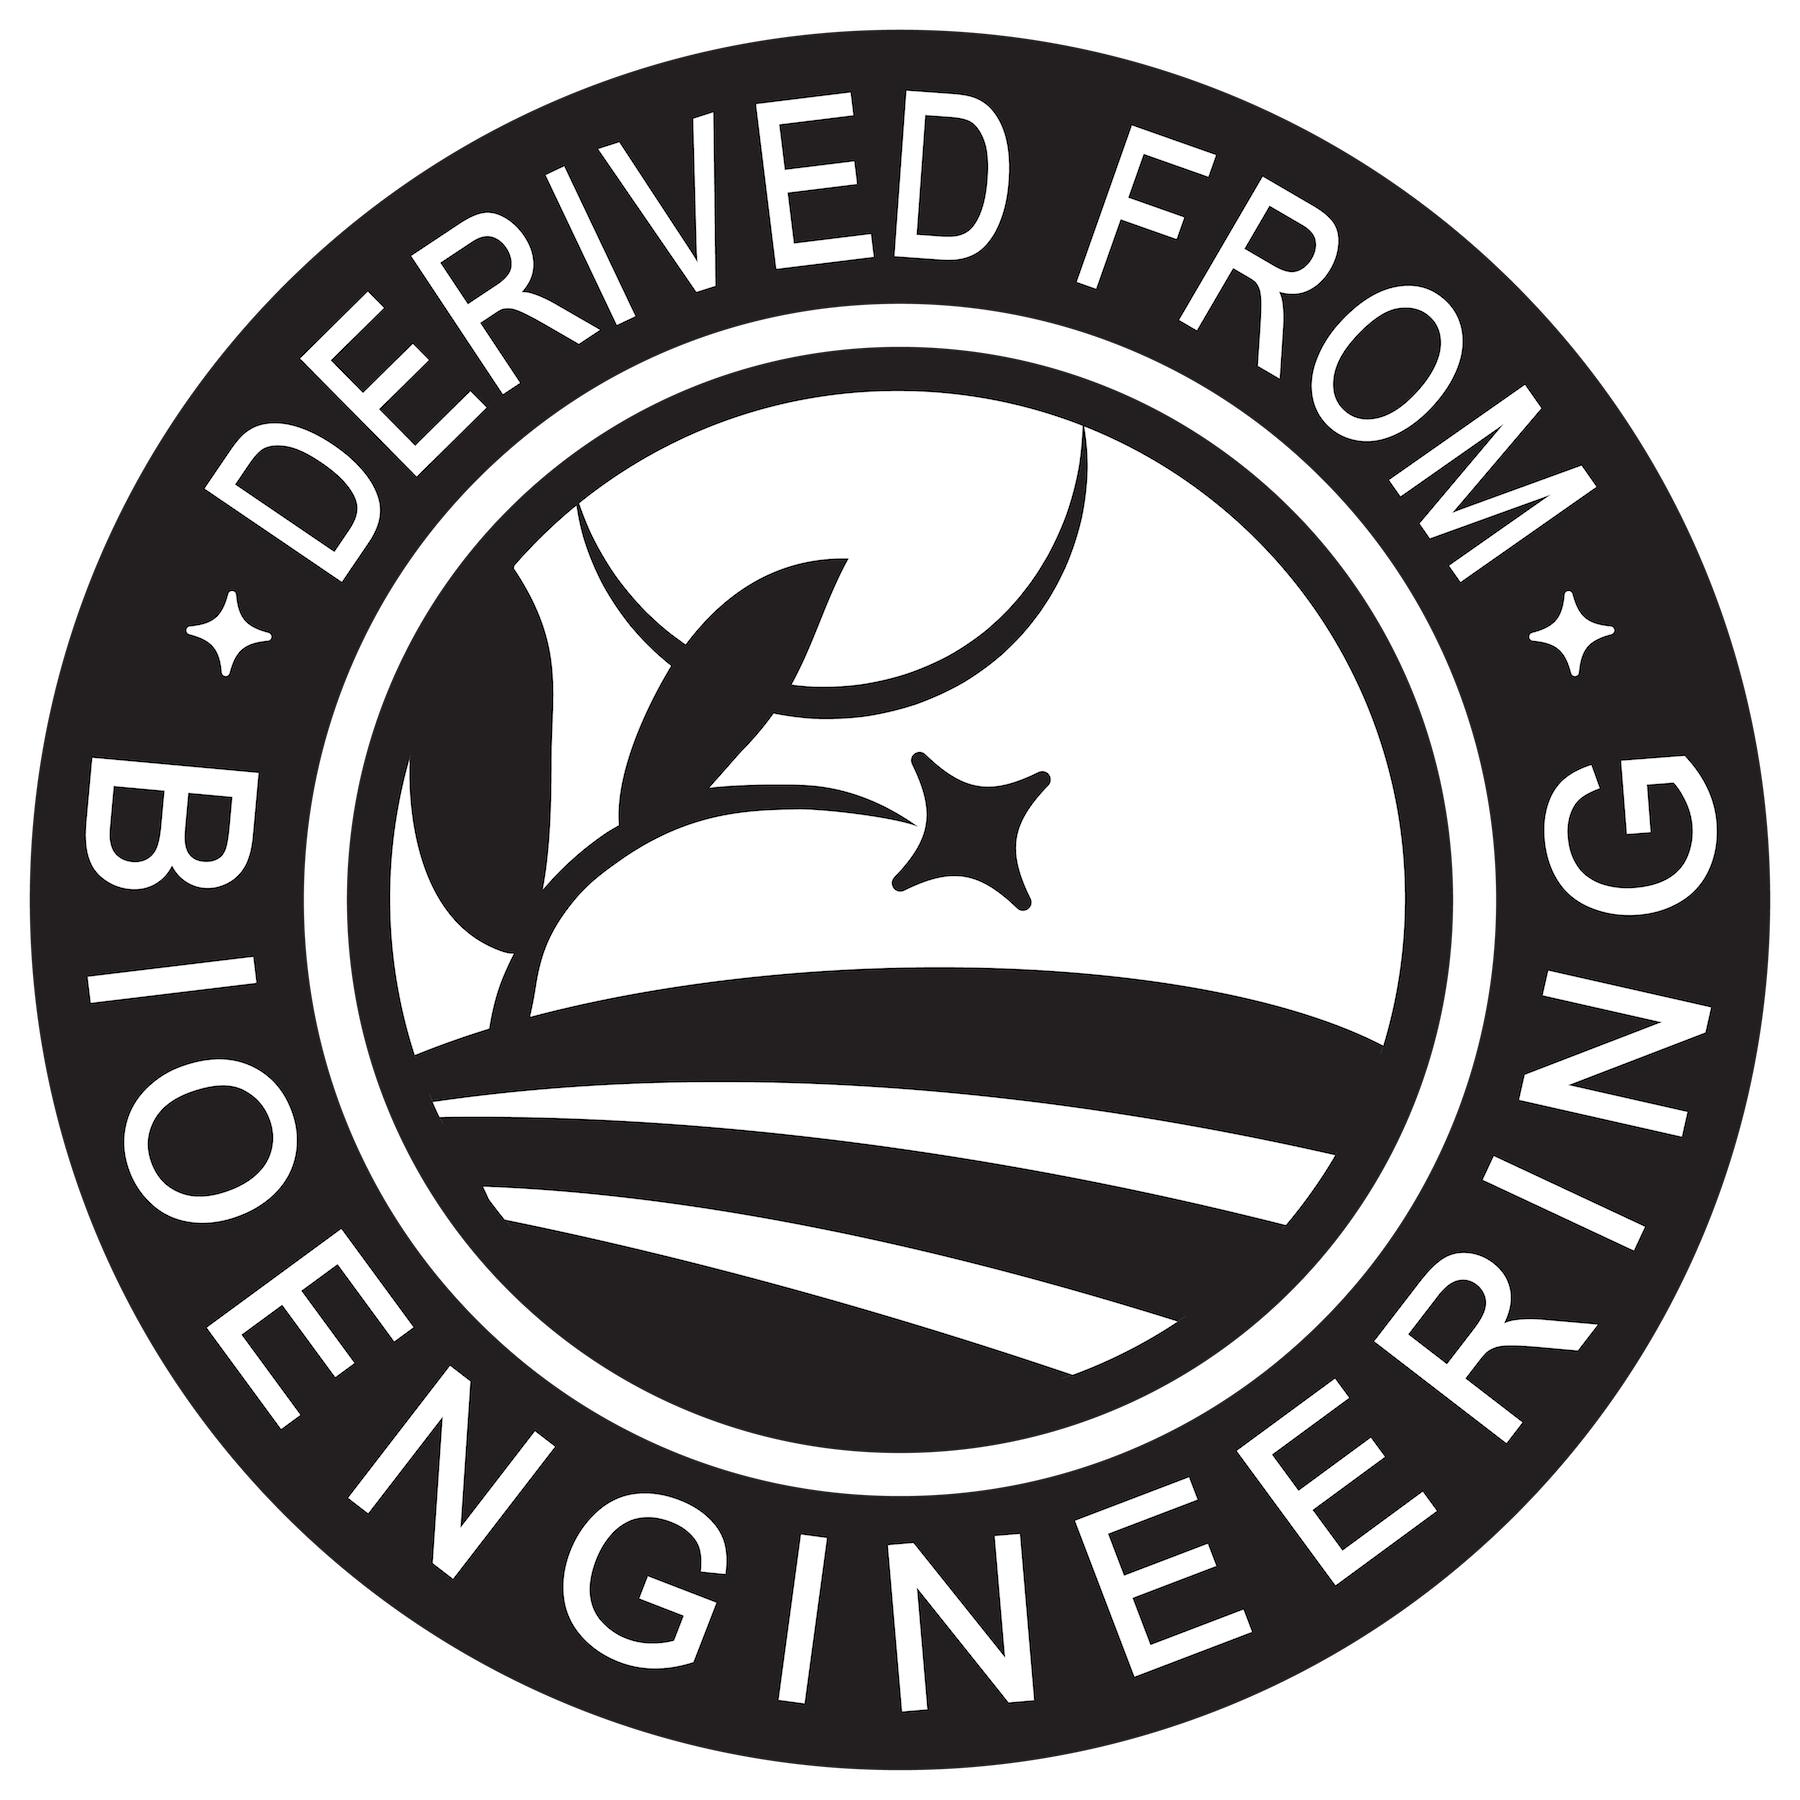 Derived from BW bioengineering label